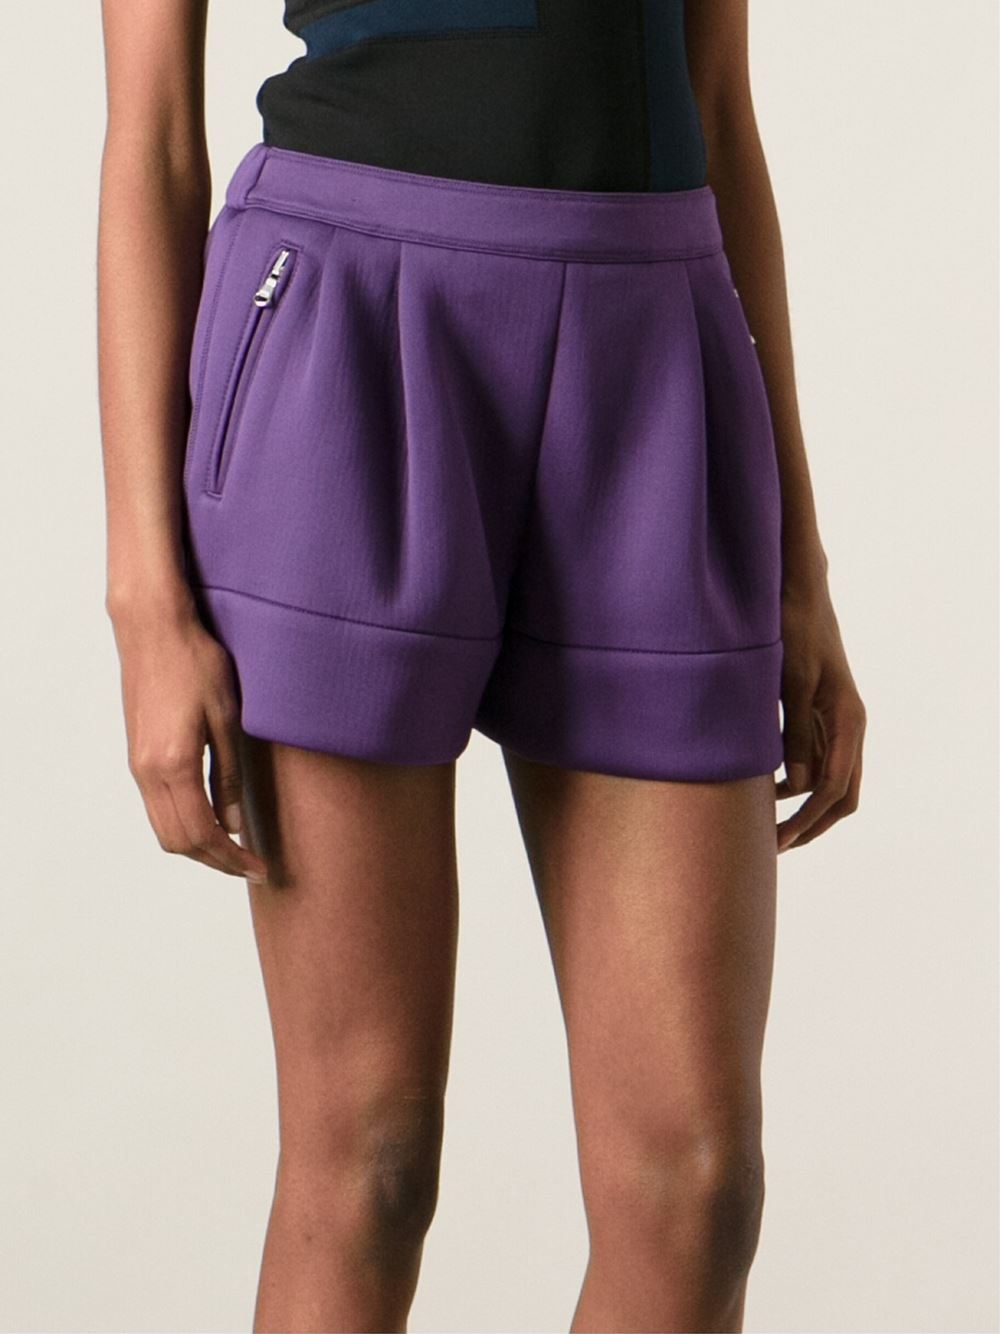 Lyst - 3.1 Phillip Lim Cuffed Pleated Shorts in Purple